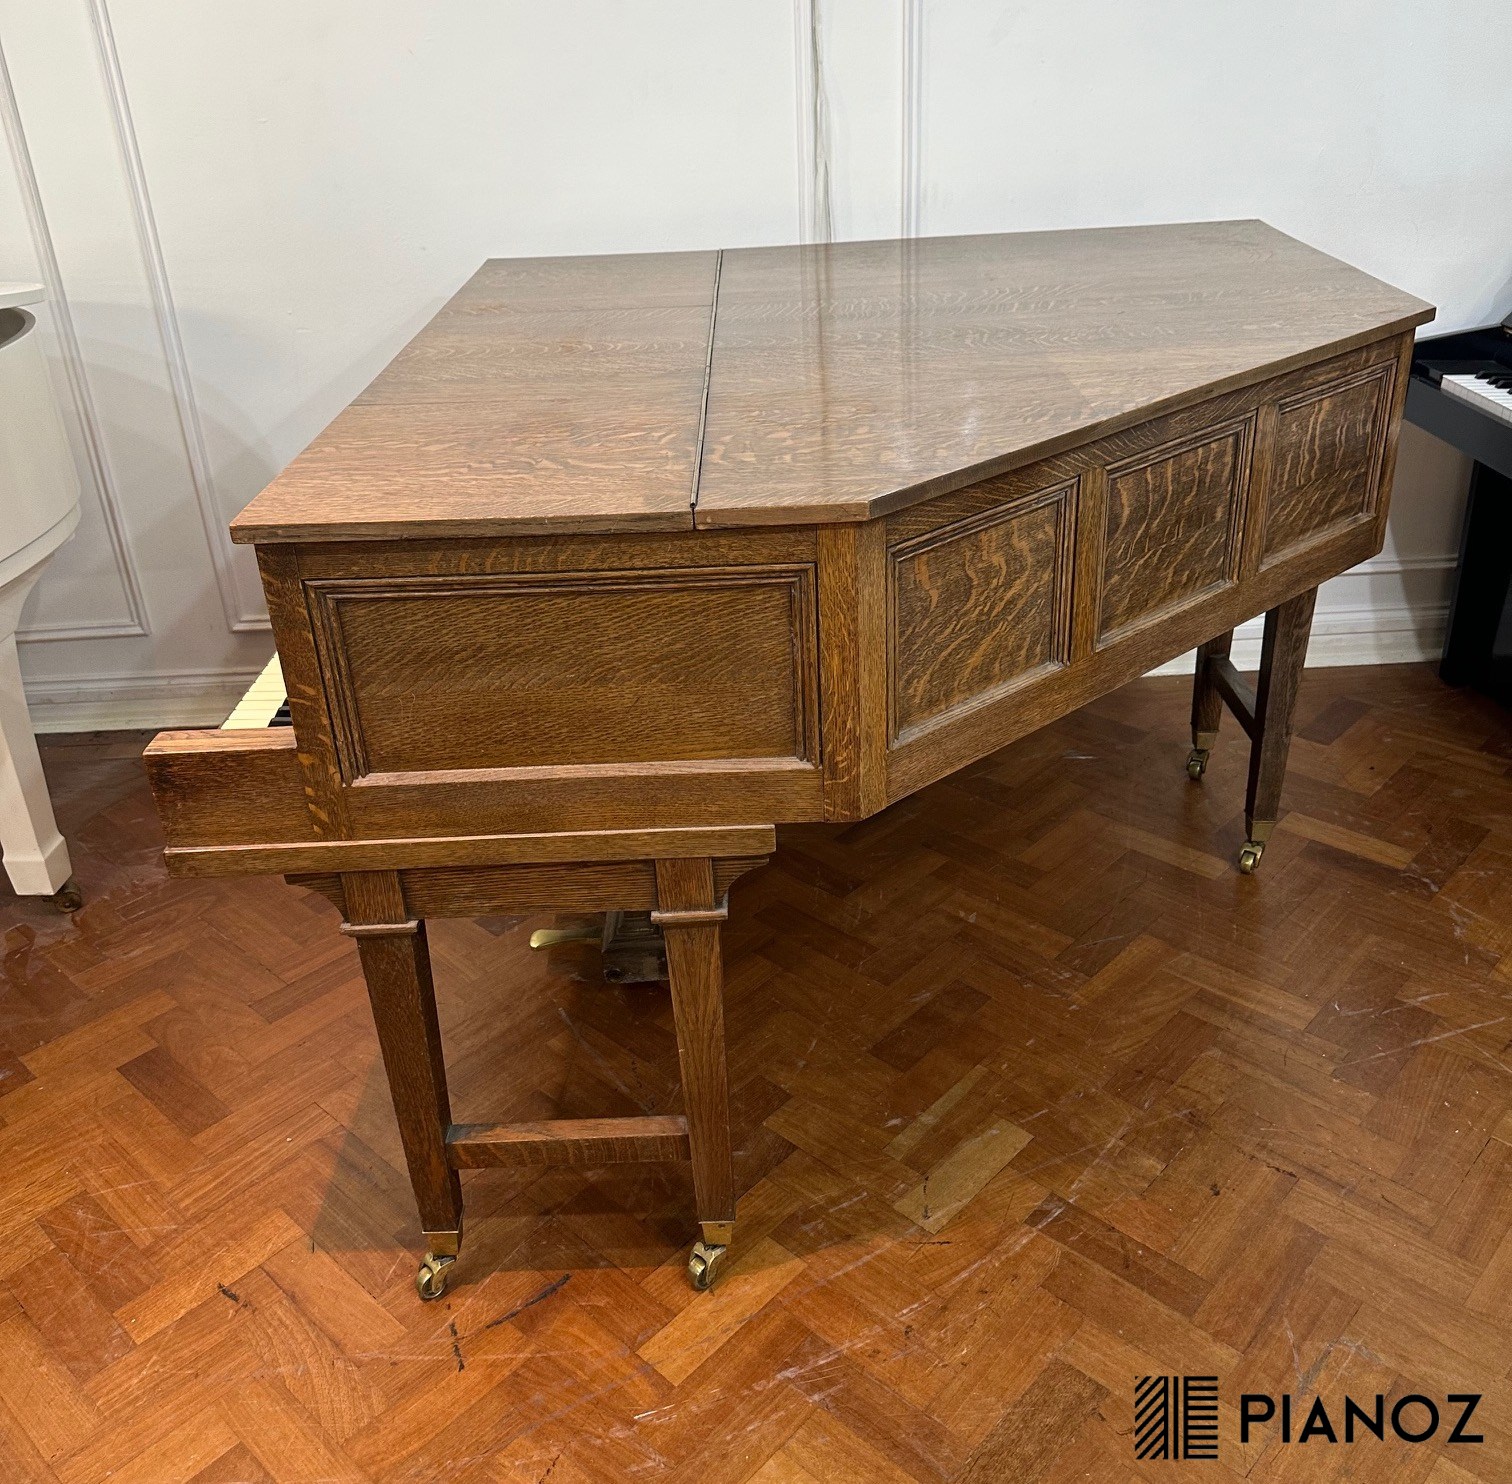 Broadwood Lutyens Baby Grand Piano piano for sale in UK